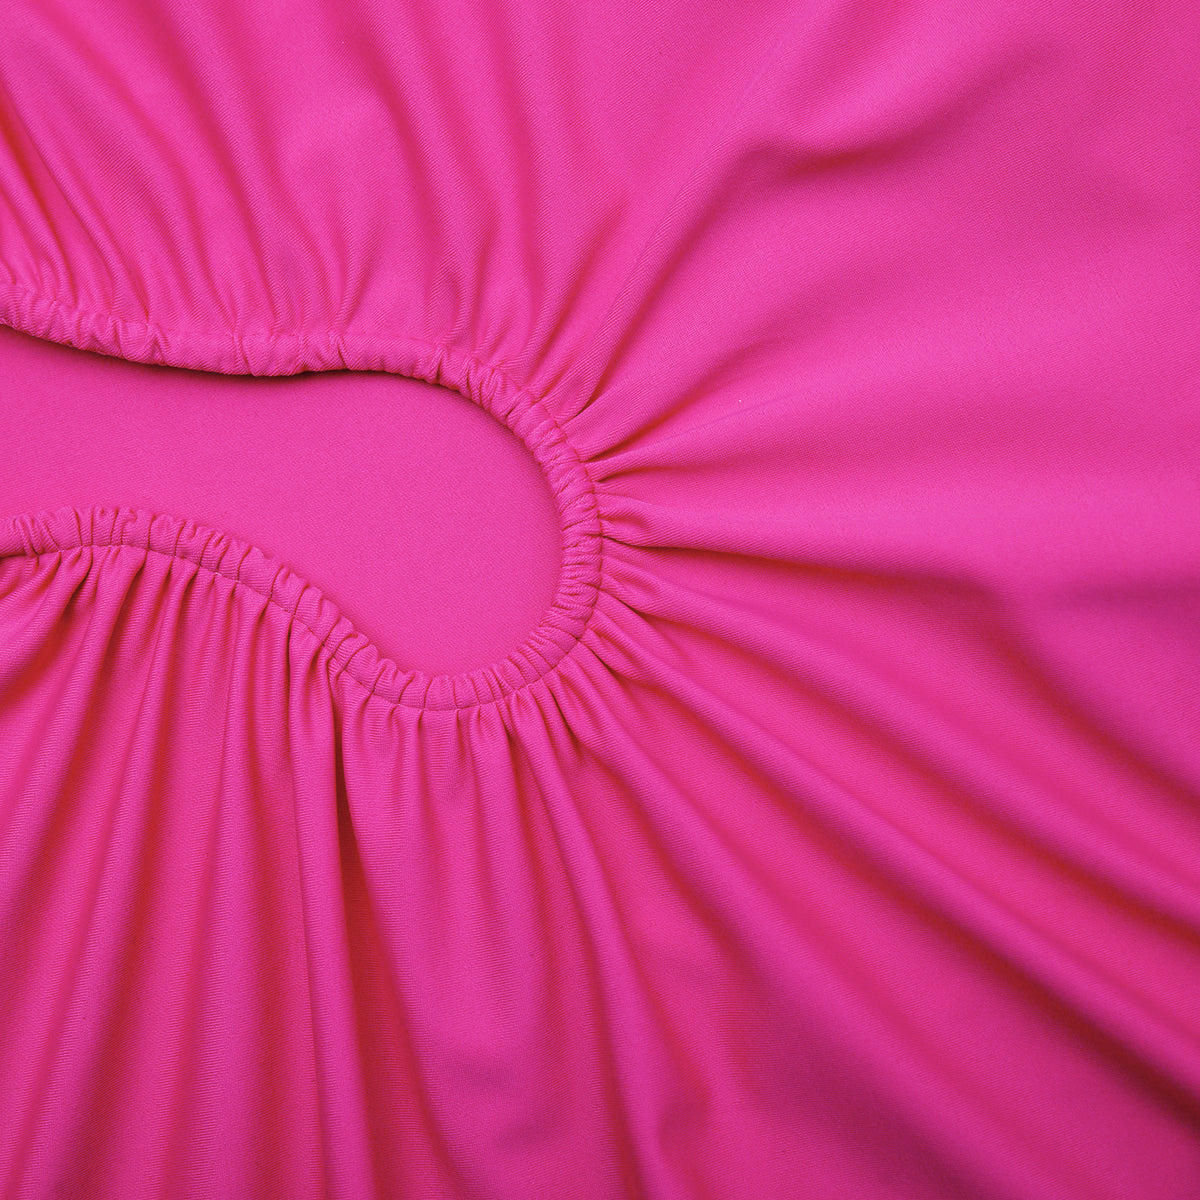 Pink Jersey Cut Out Maxi Dress